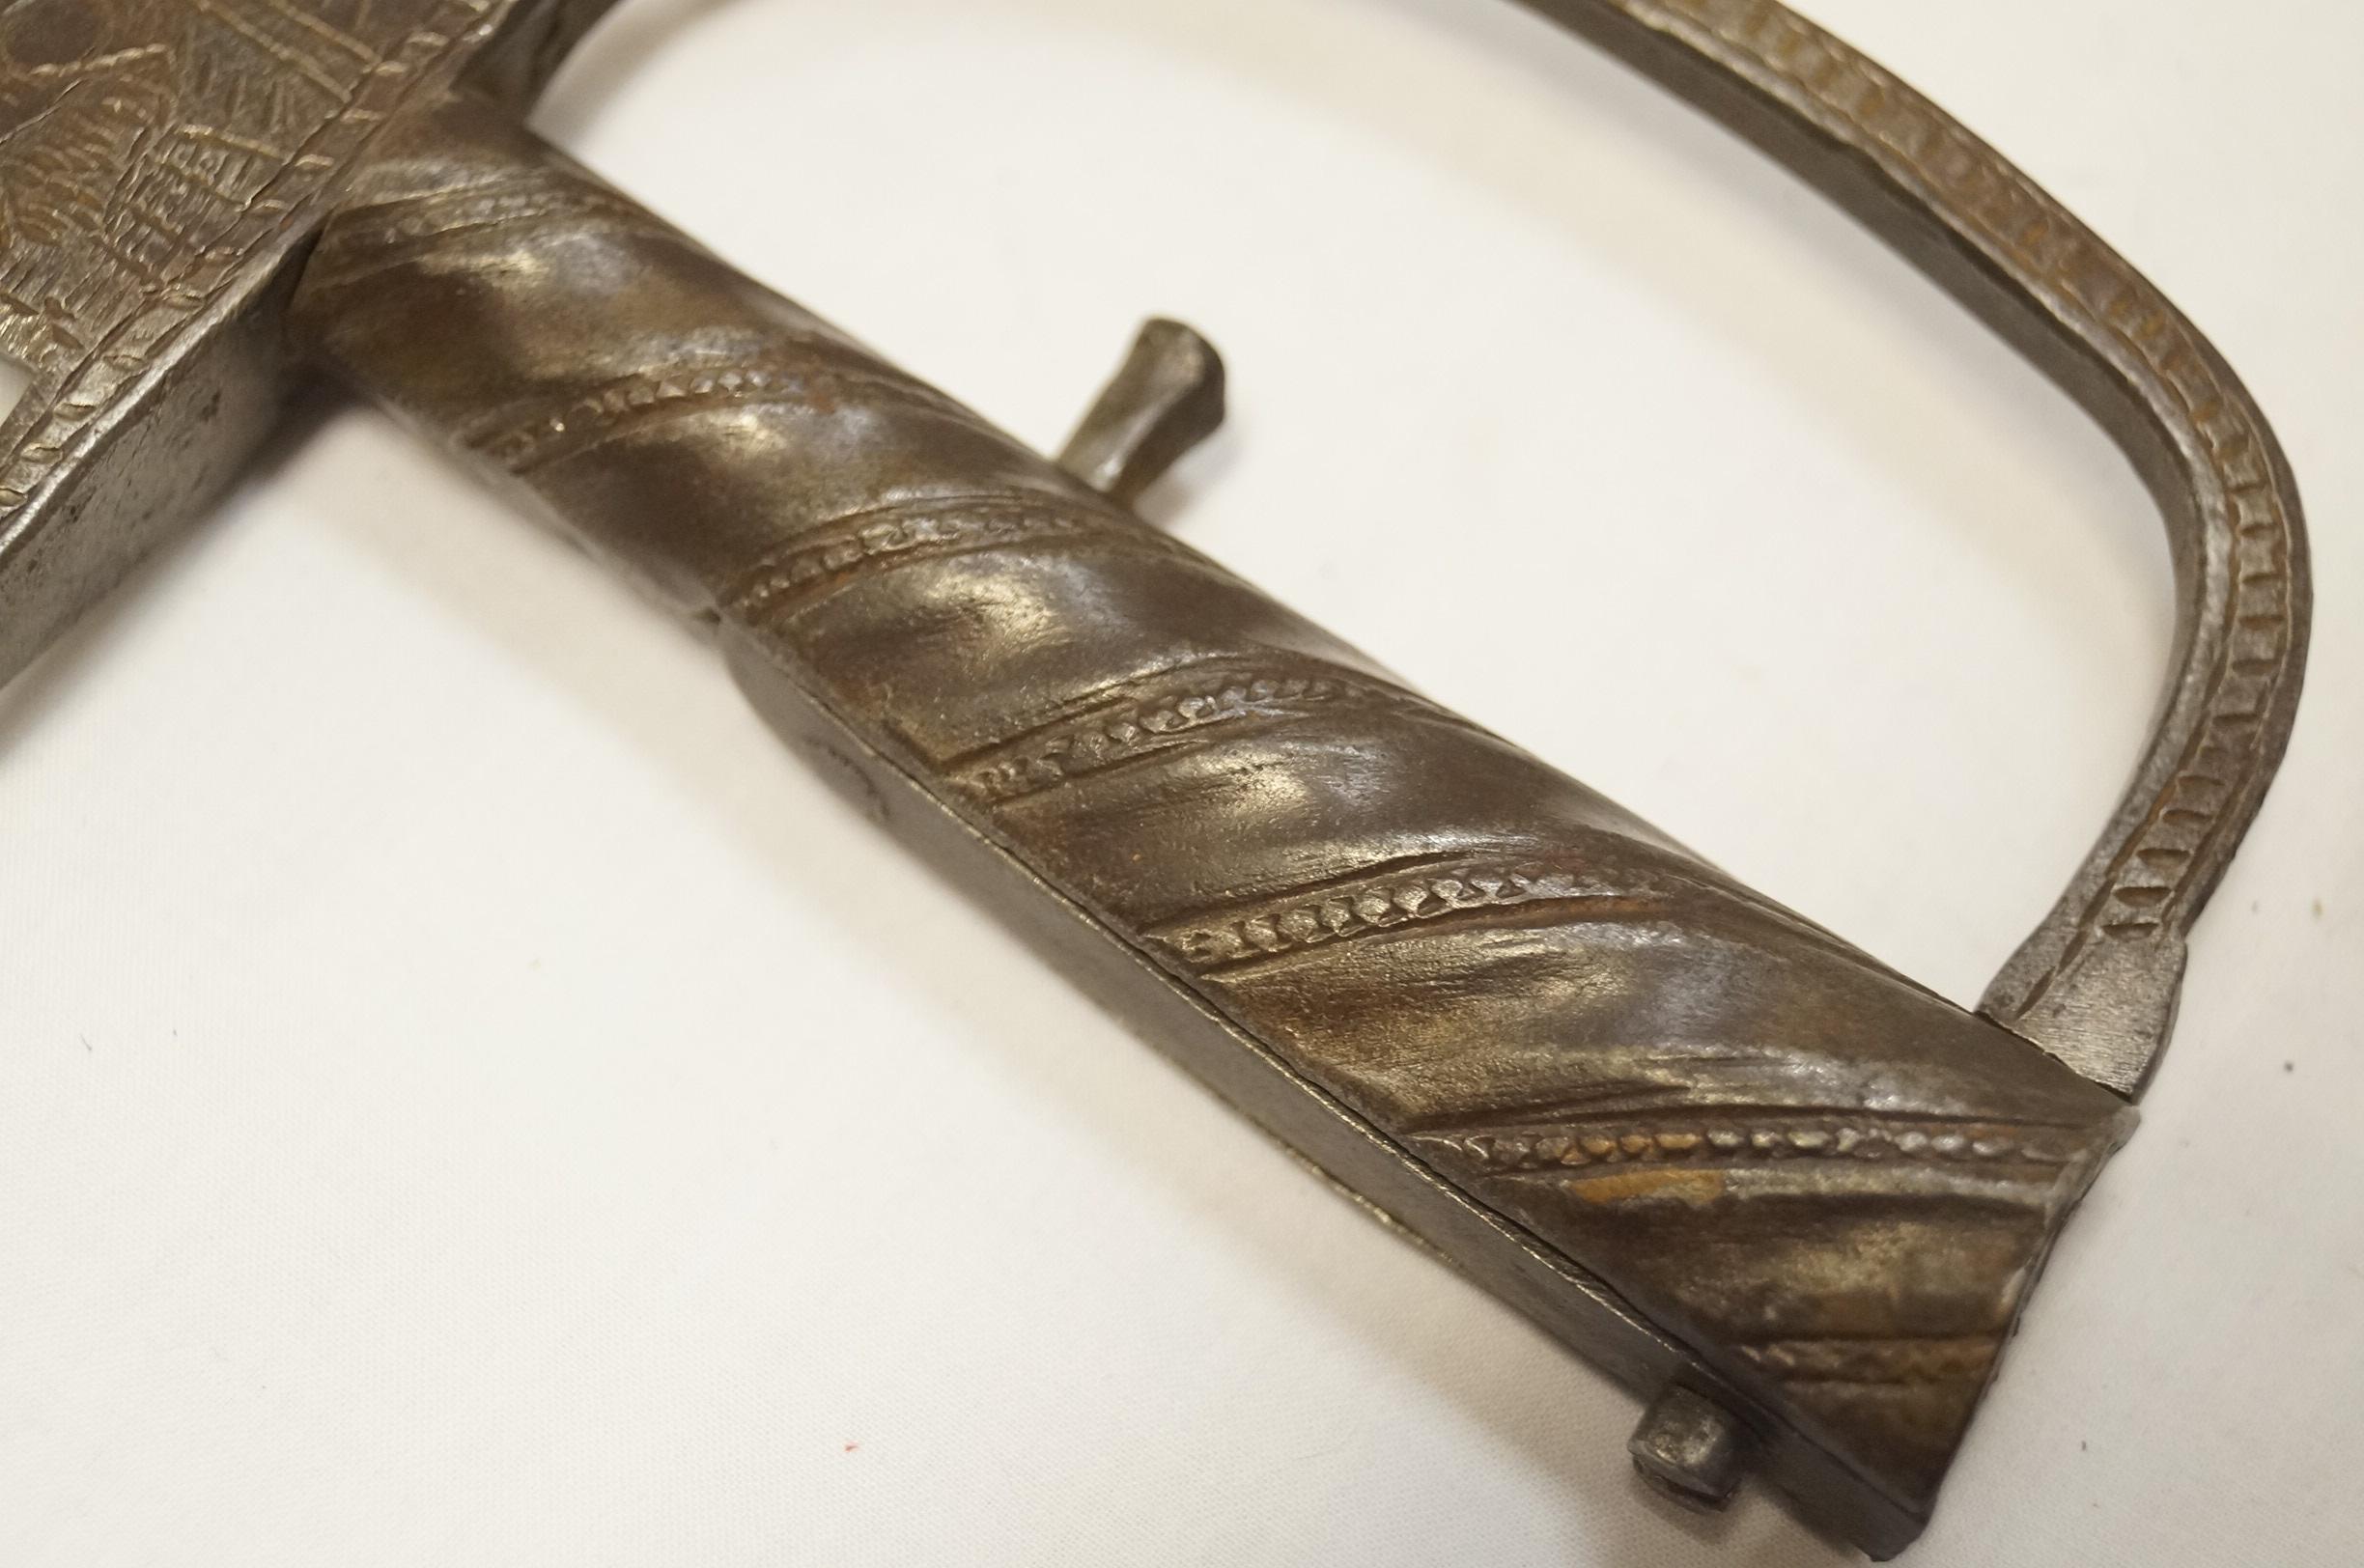 Rare 19th Century Indian Made Baker Rifle Sword Bayonet